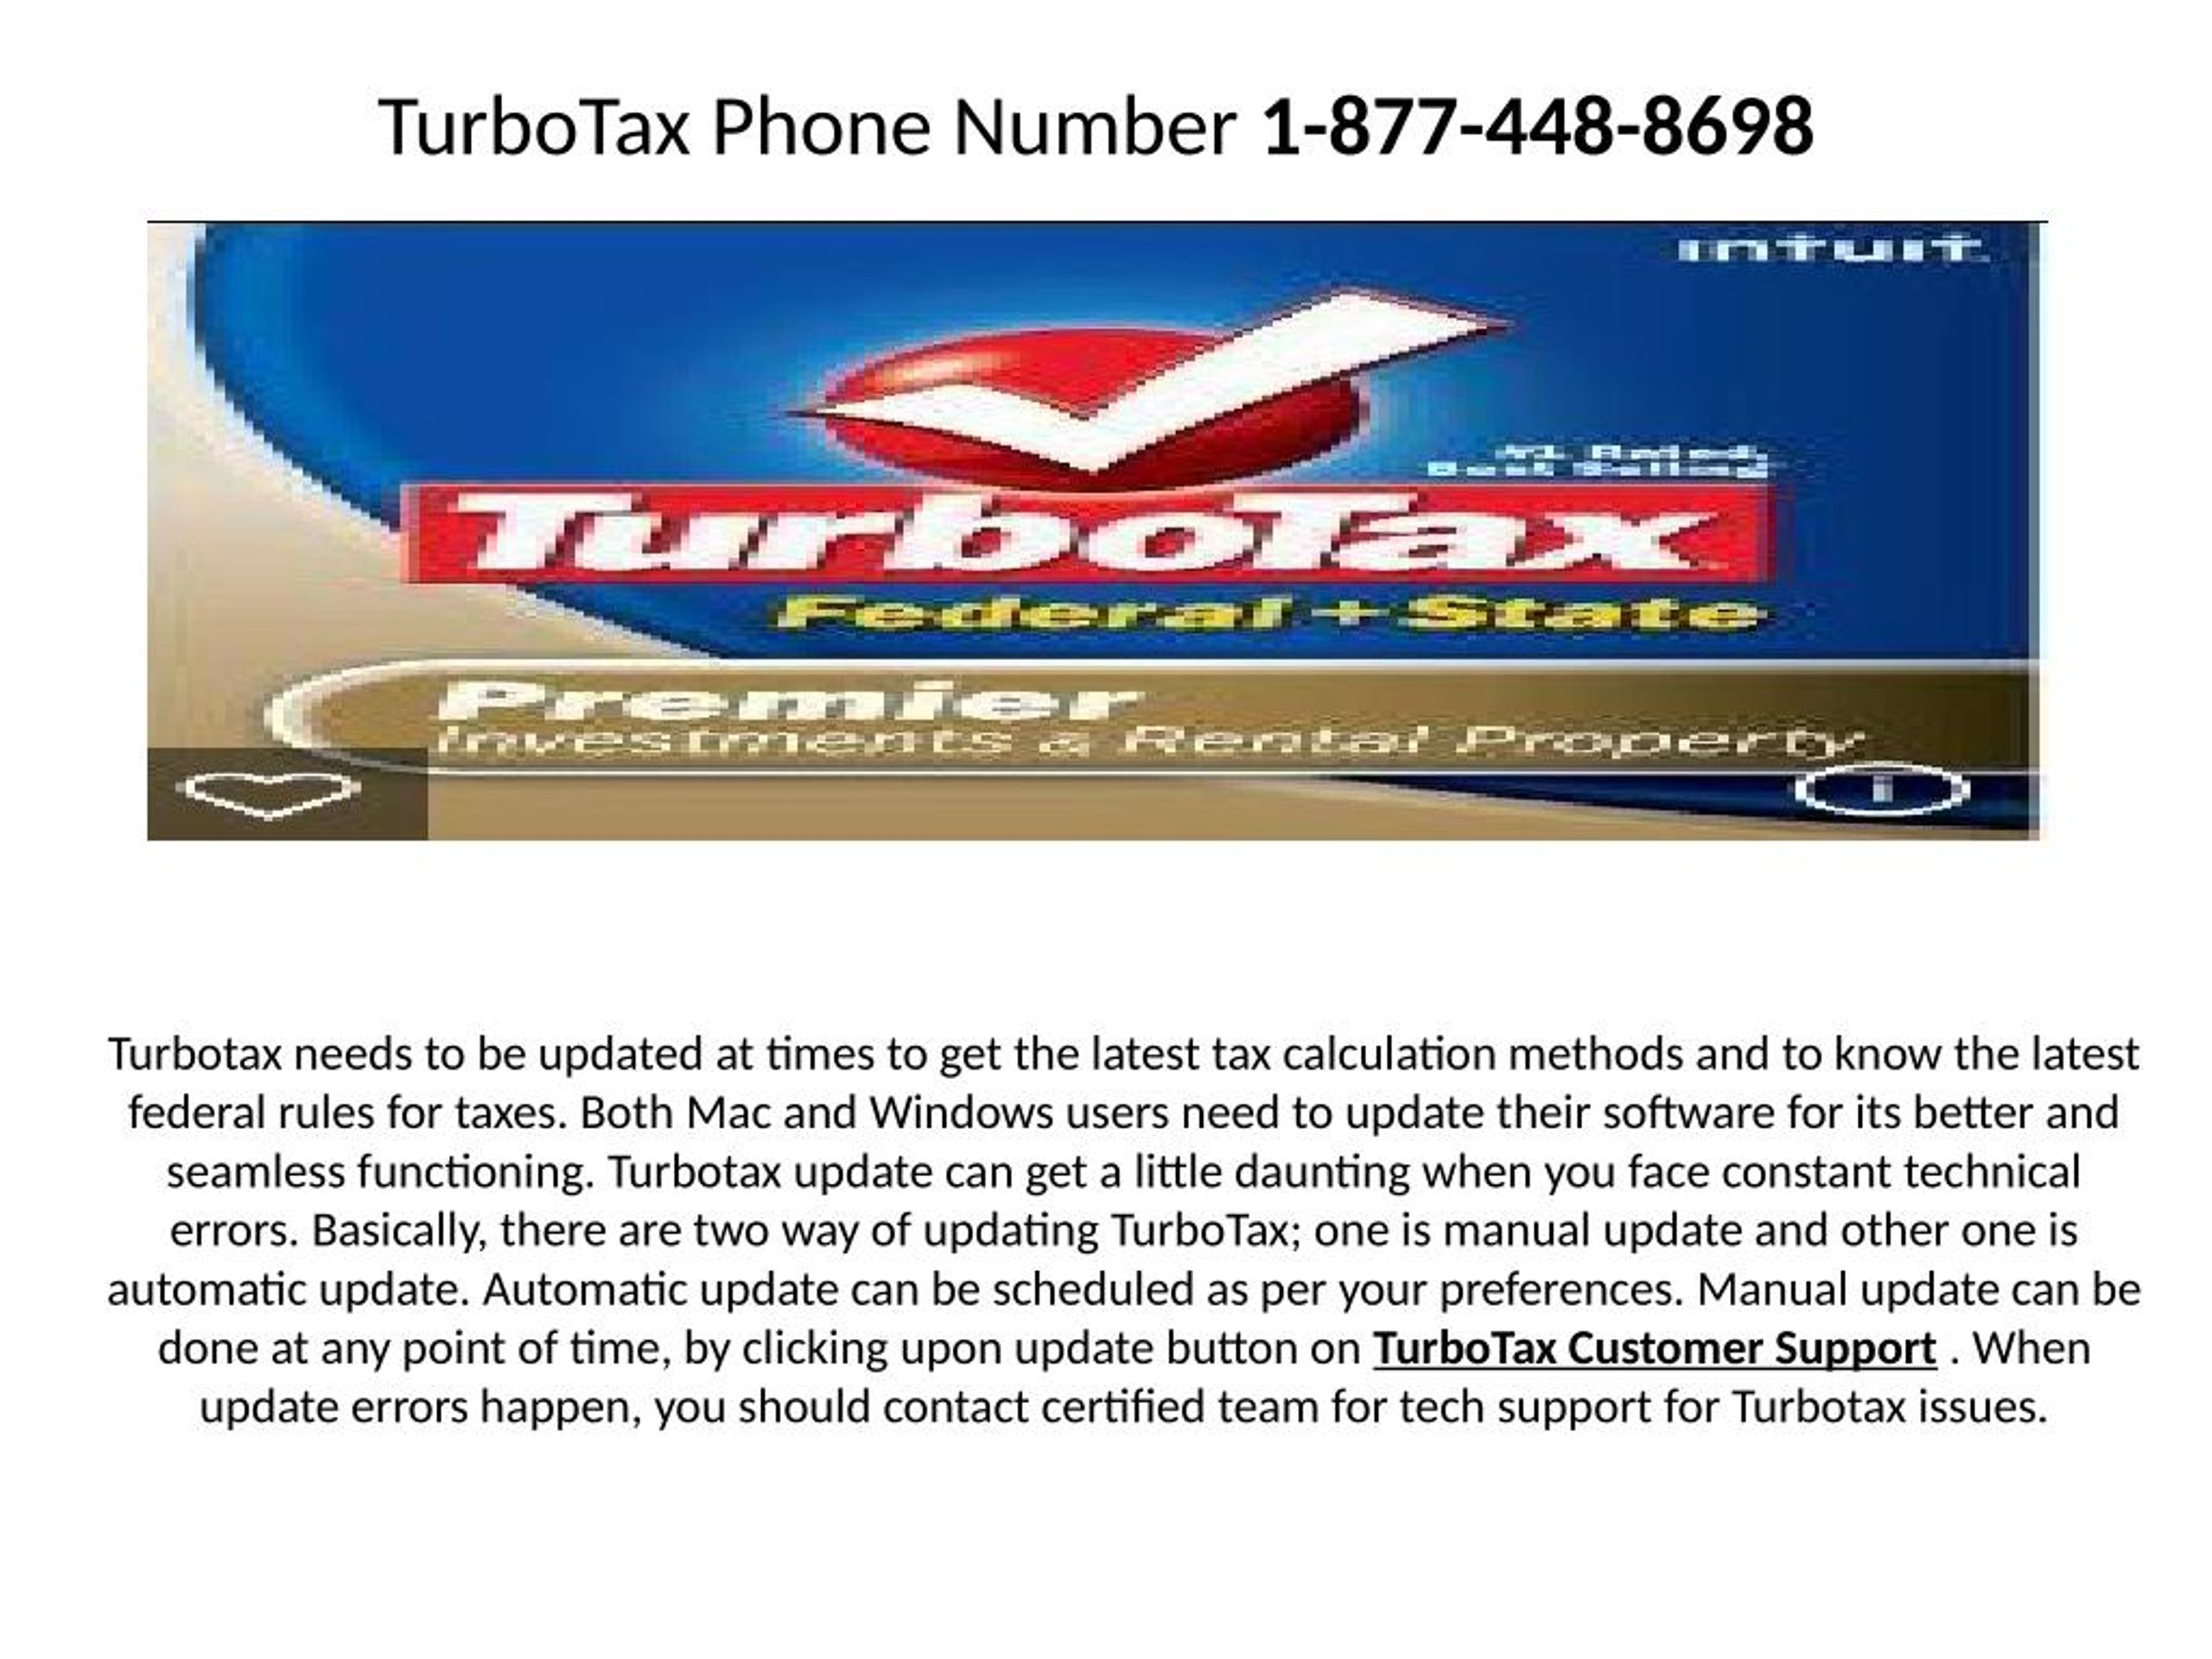 contact turbotax